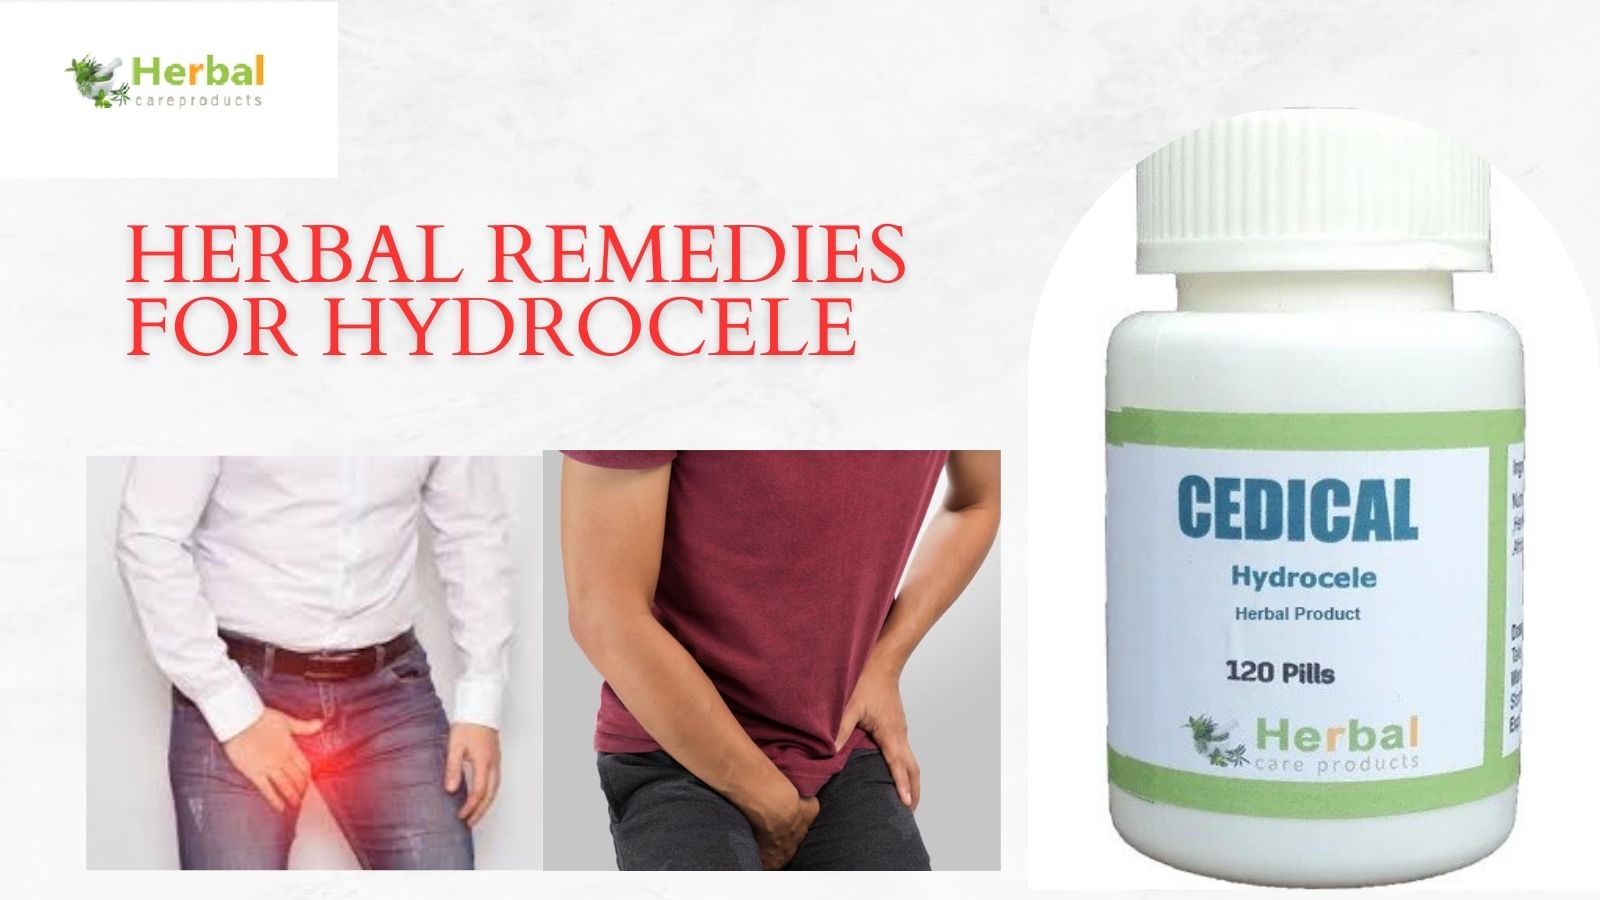 Cedical Herbal Remedies for Hydrocele - California - Chula Vista ID1539081